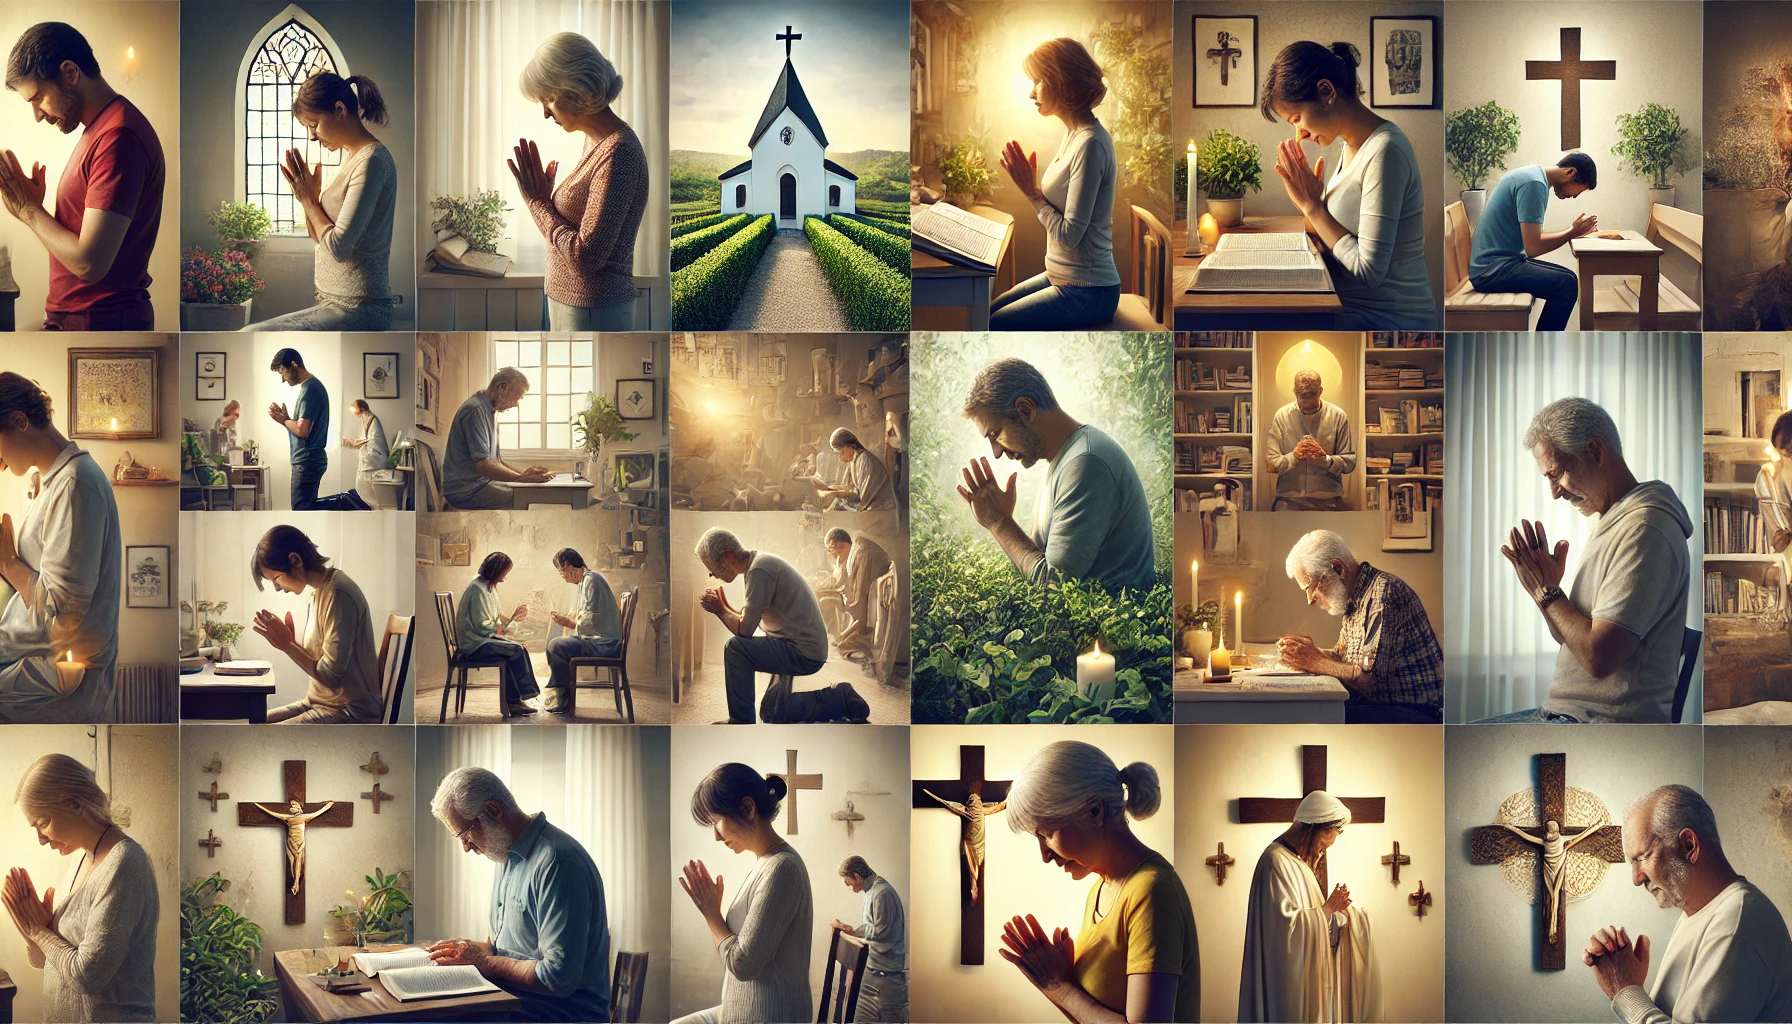 20 Reasons Prayer Is Important